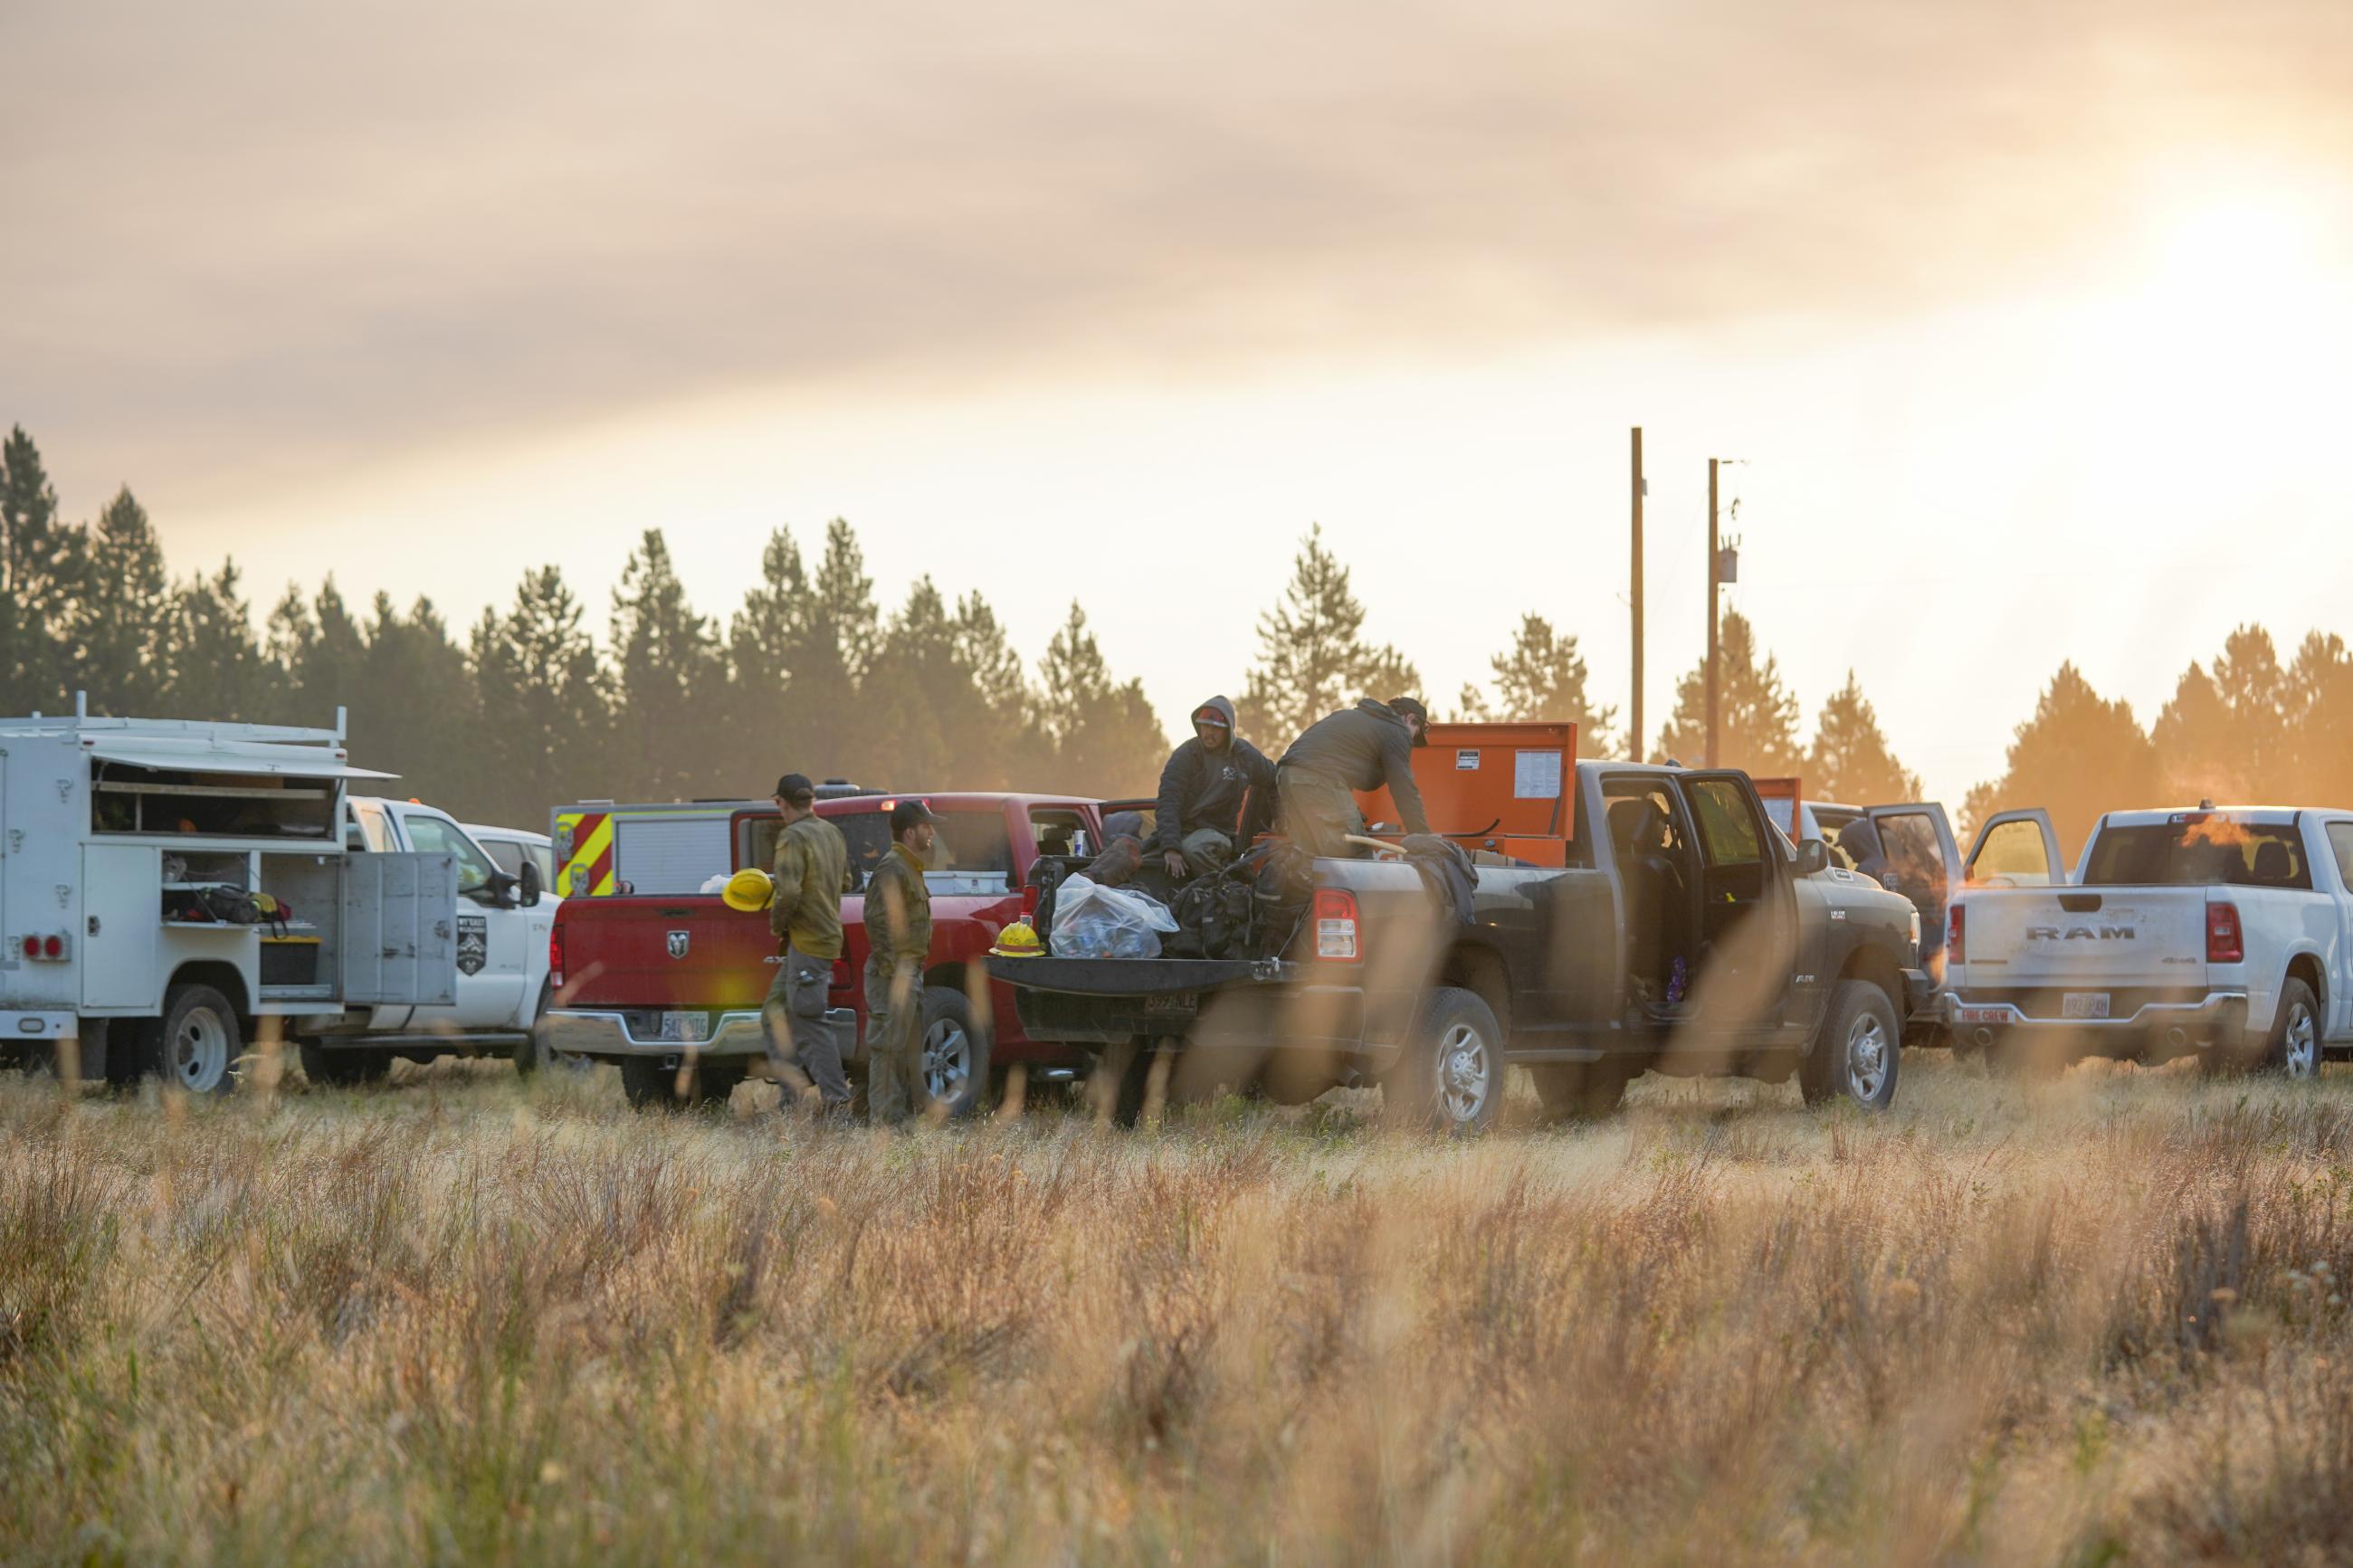 Sunrise behind firemen getting their gear ready in their trucks in a field.